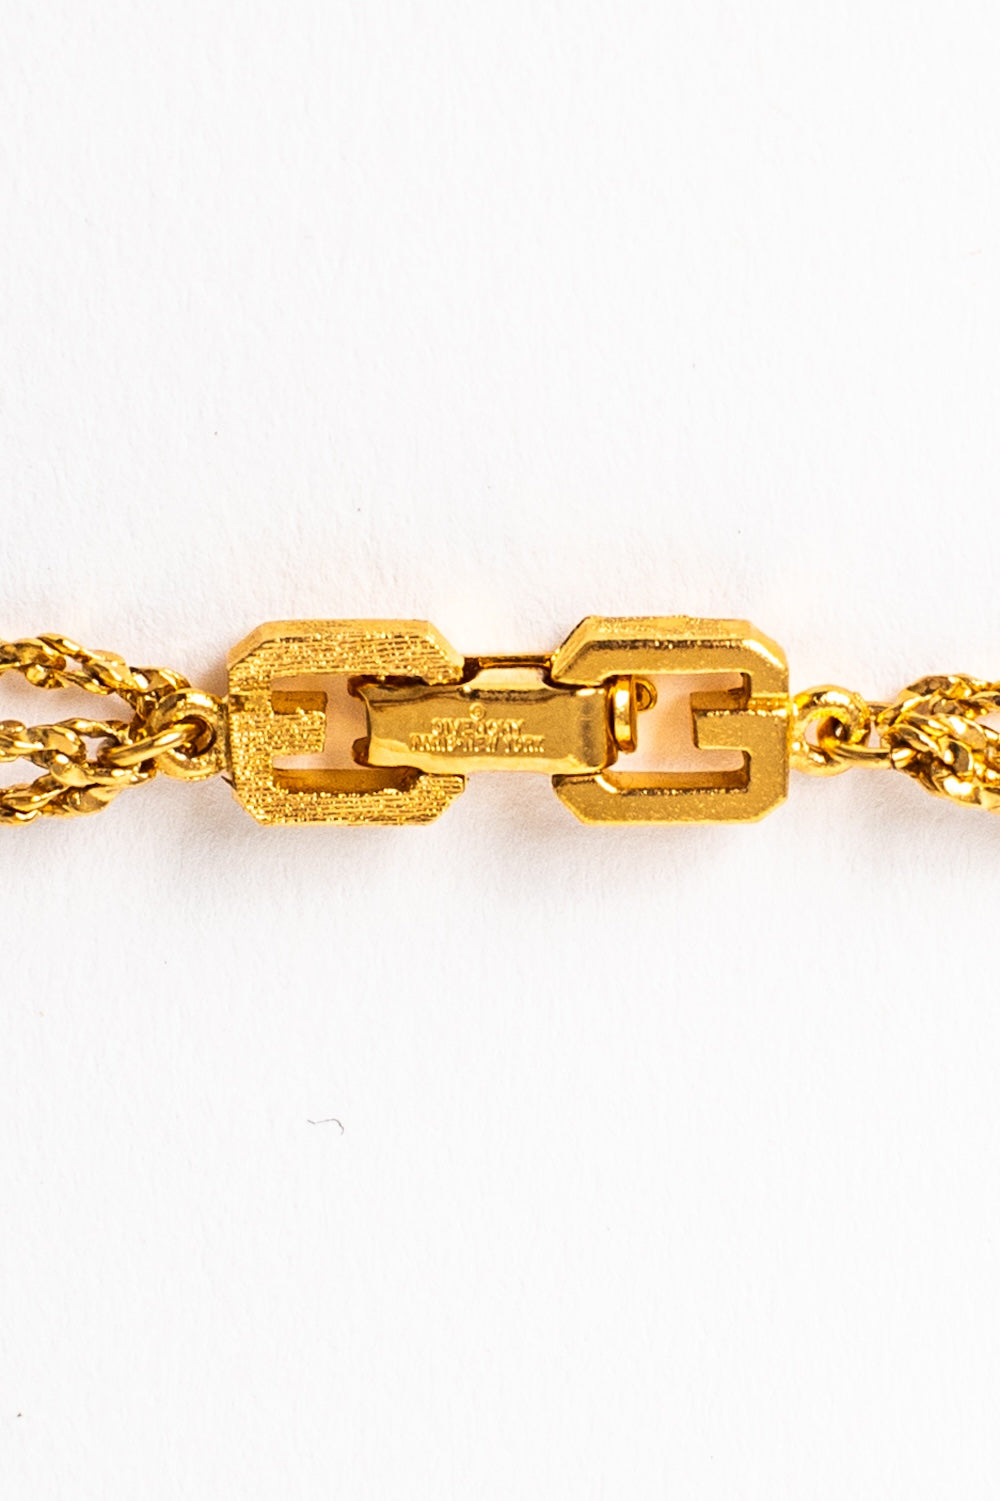 Givenchy <br> 80's Anthurium pendant gold triple strand chain necklace